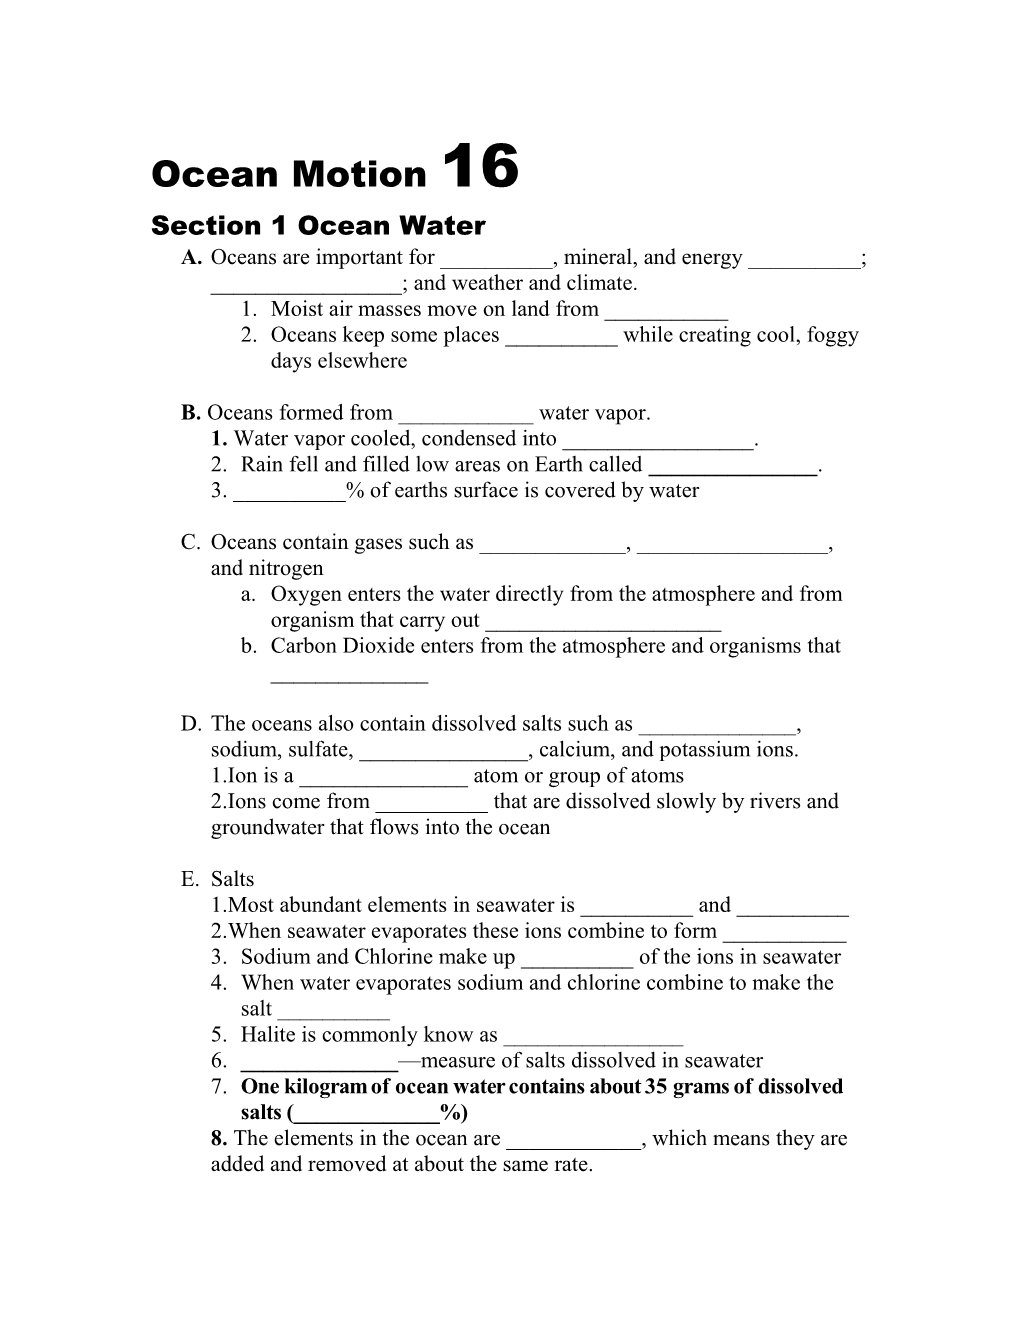 Section 1 Ocean Water